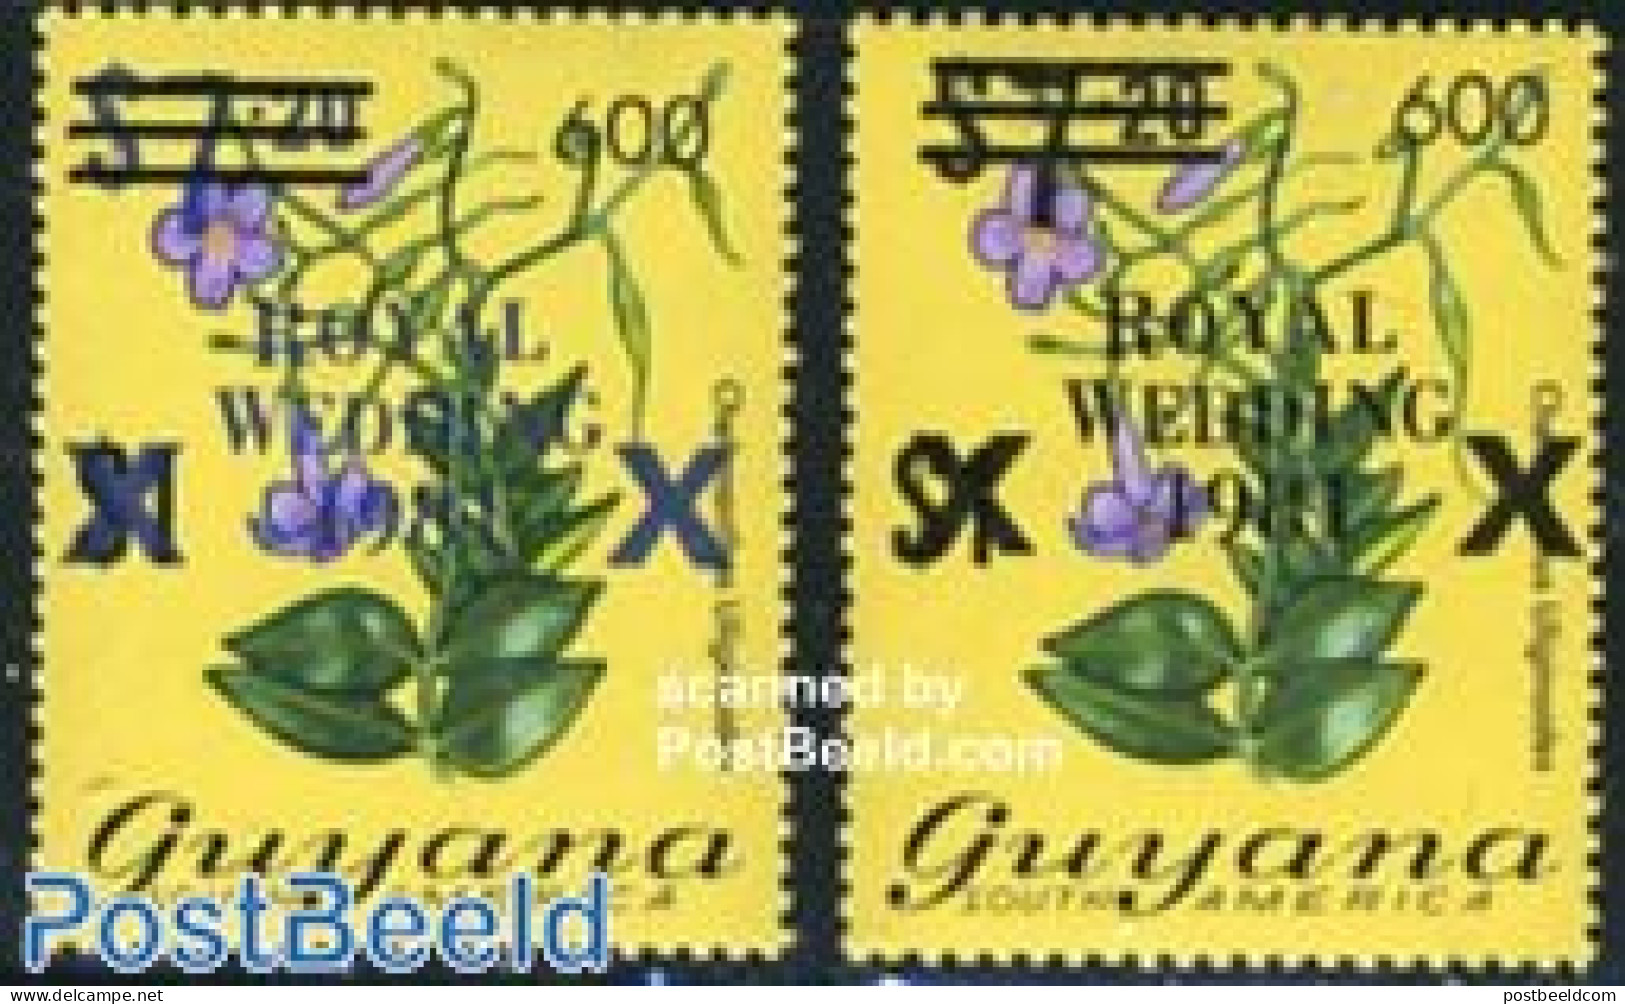 Guyana 1984 Overprints 2v, Mint NH, Nature - Flowers & Plants - Guyana (1966-...)